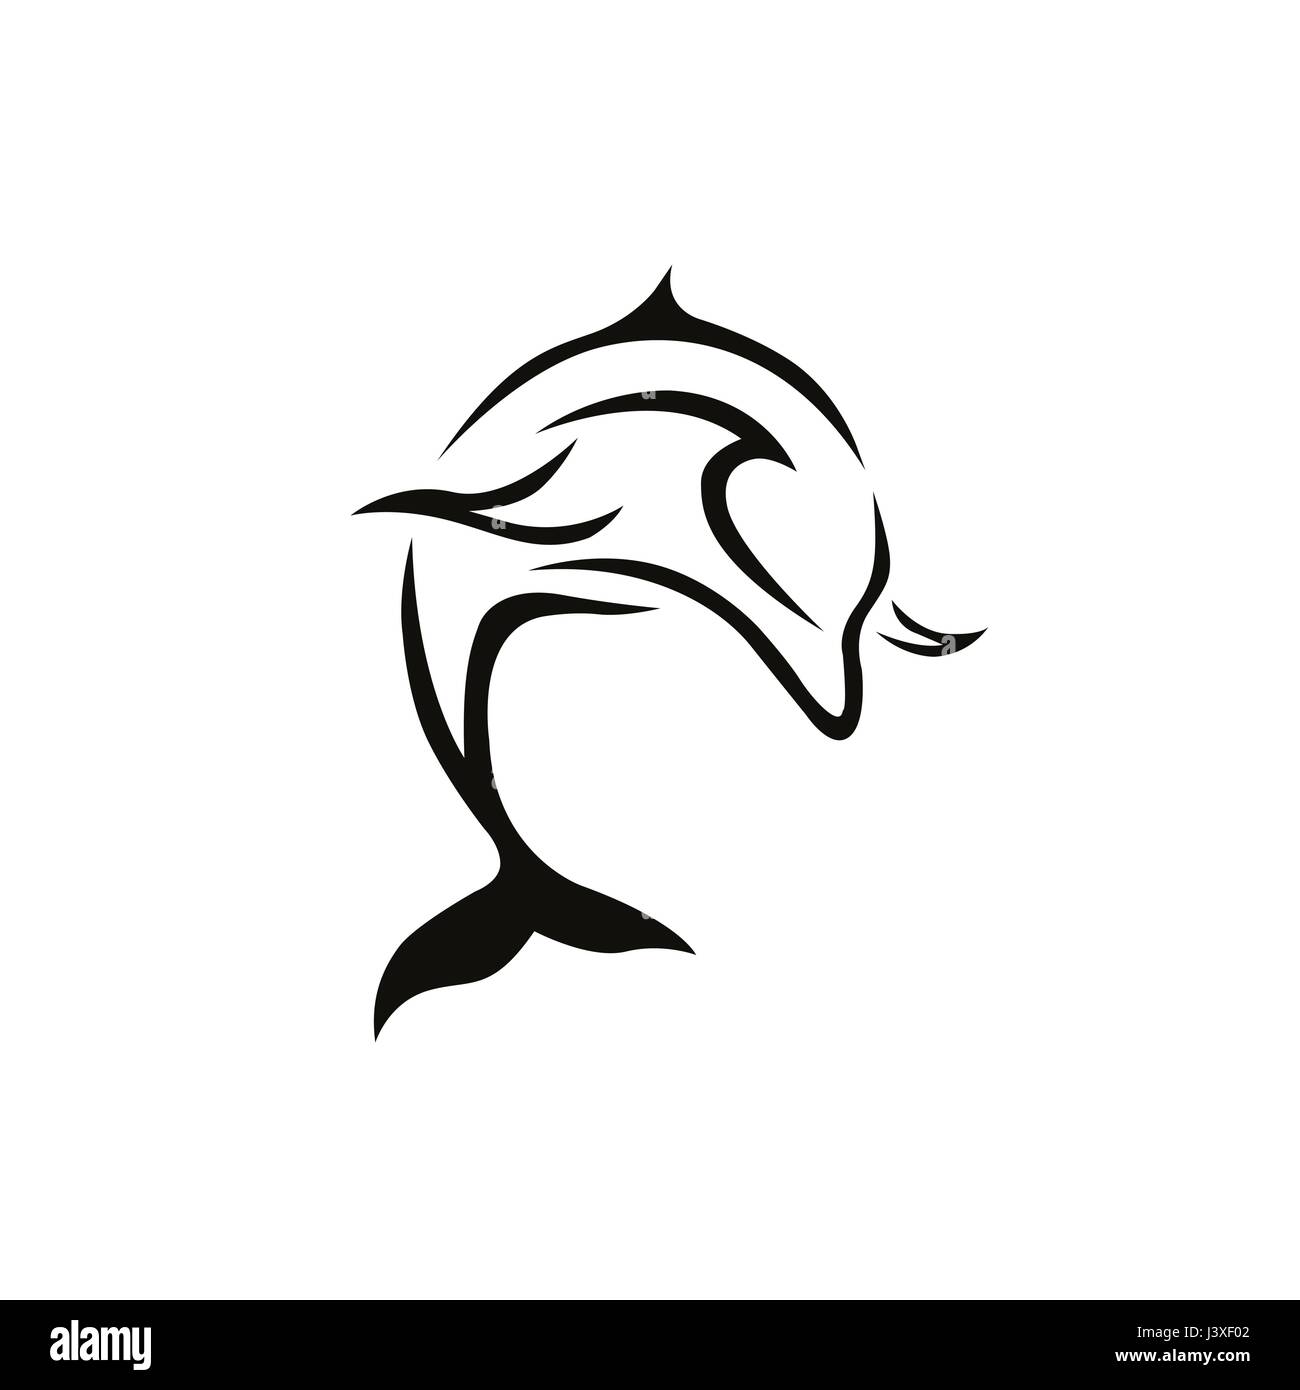 dolphin tattoo | ShopLook